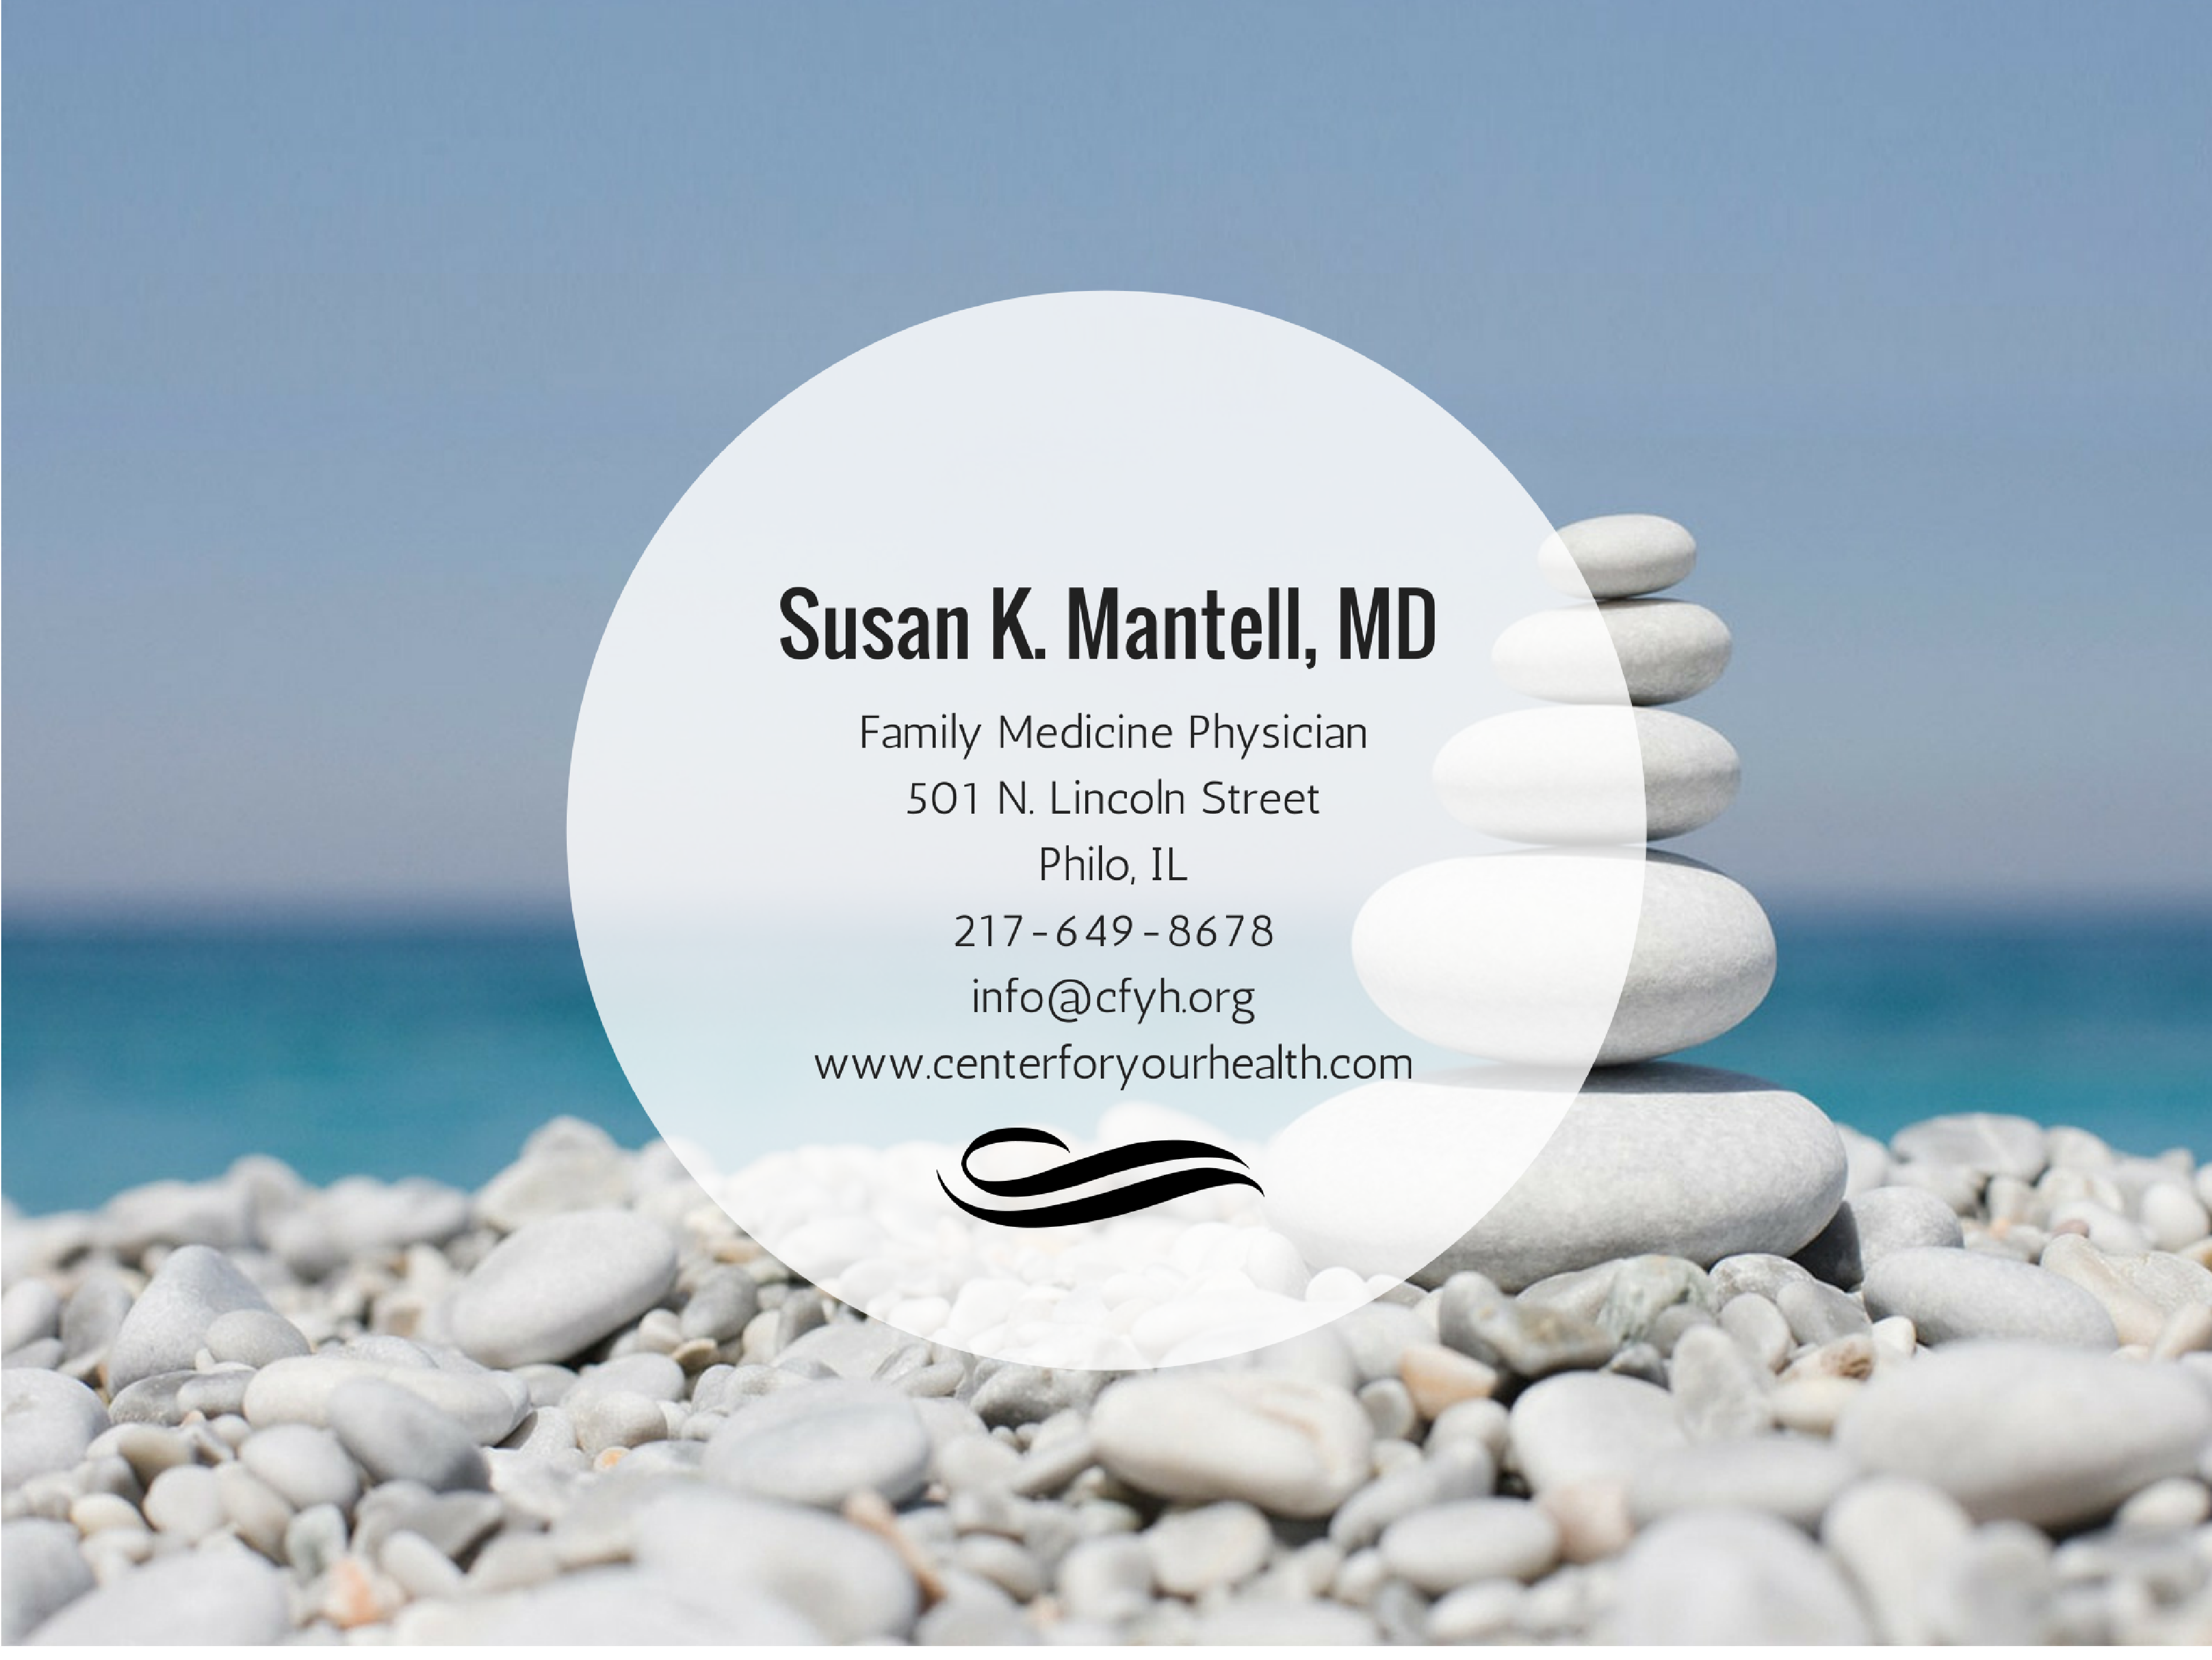 Susan K. Mantell, MD